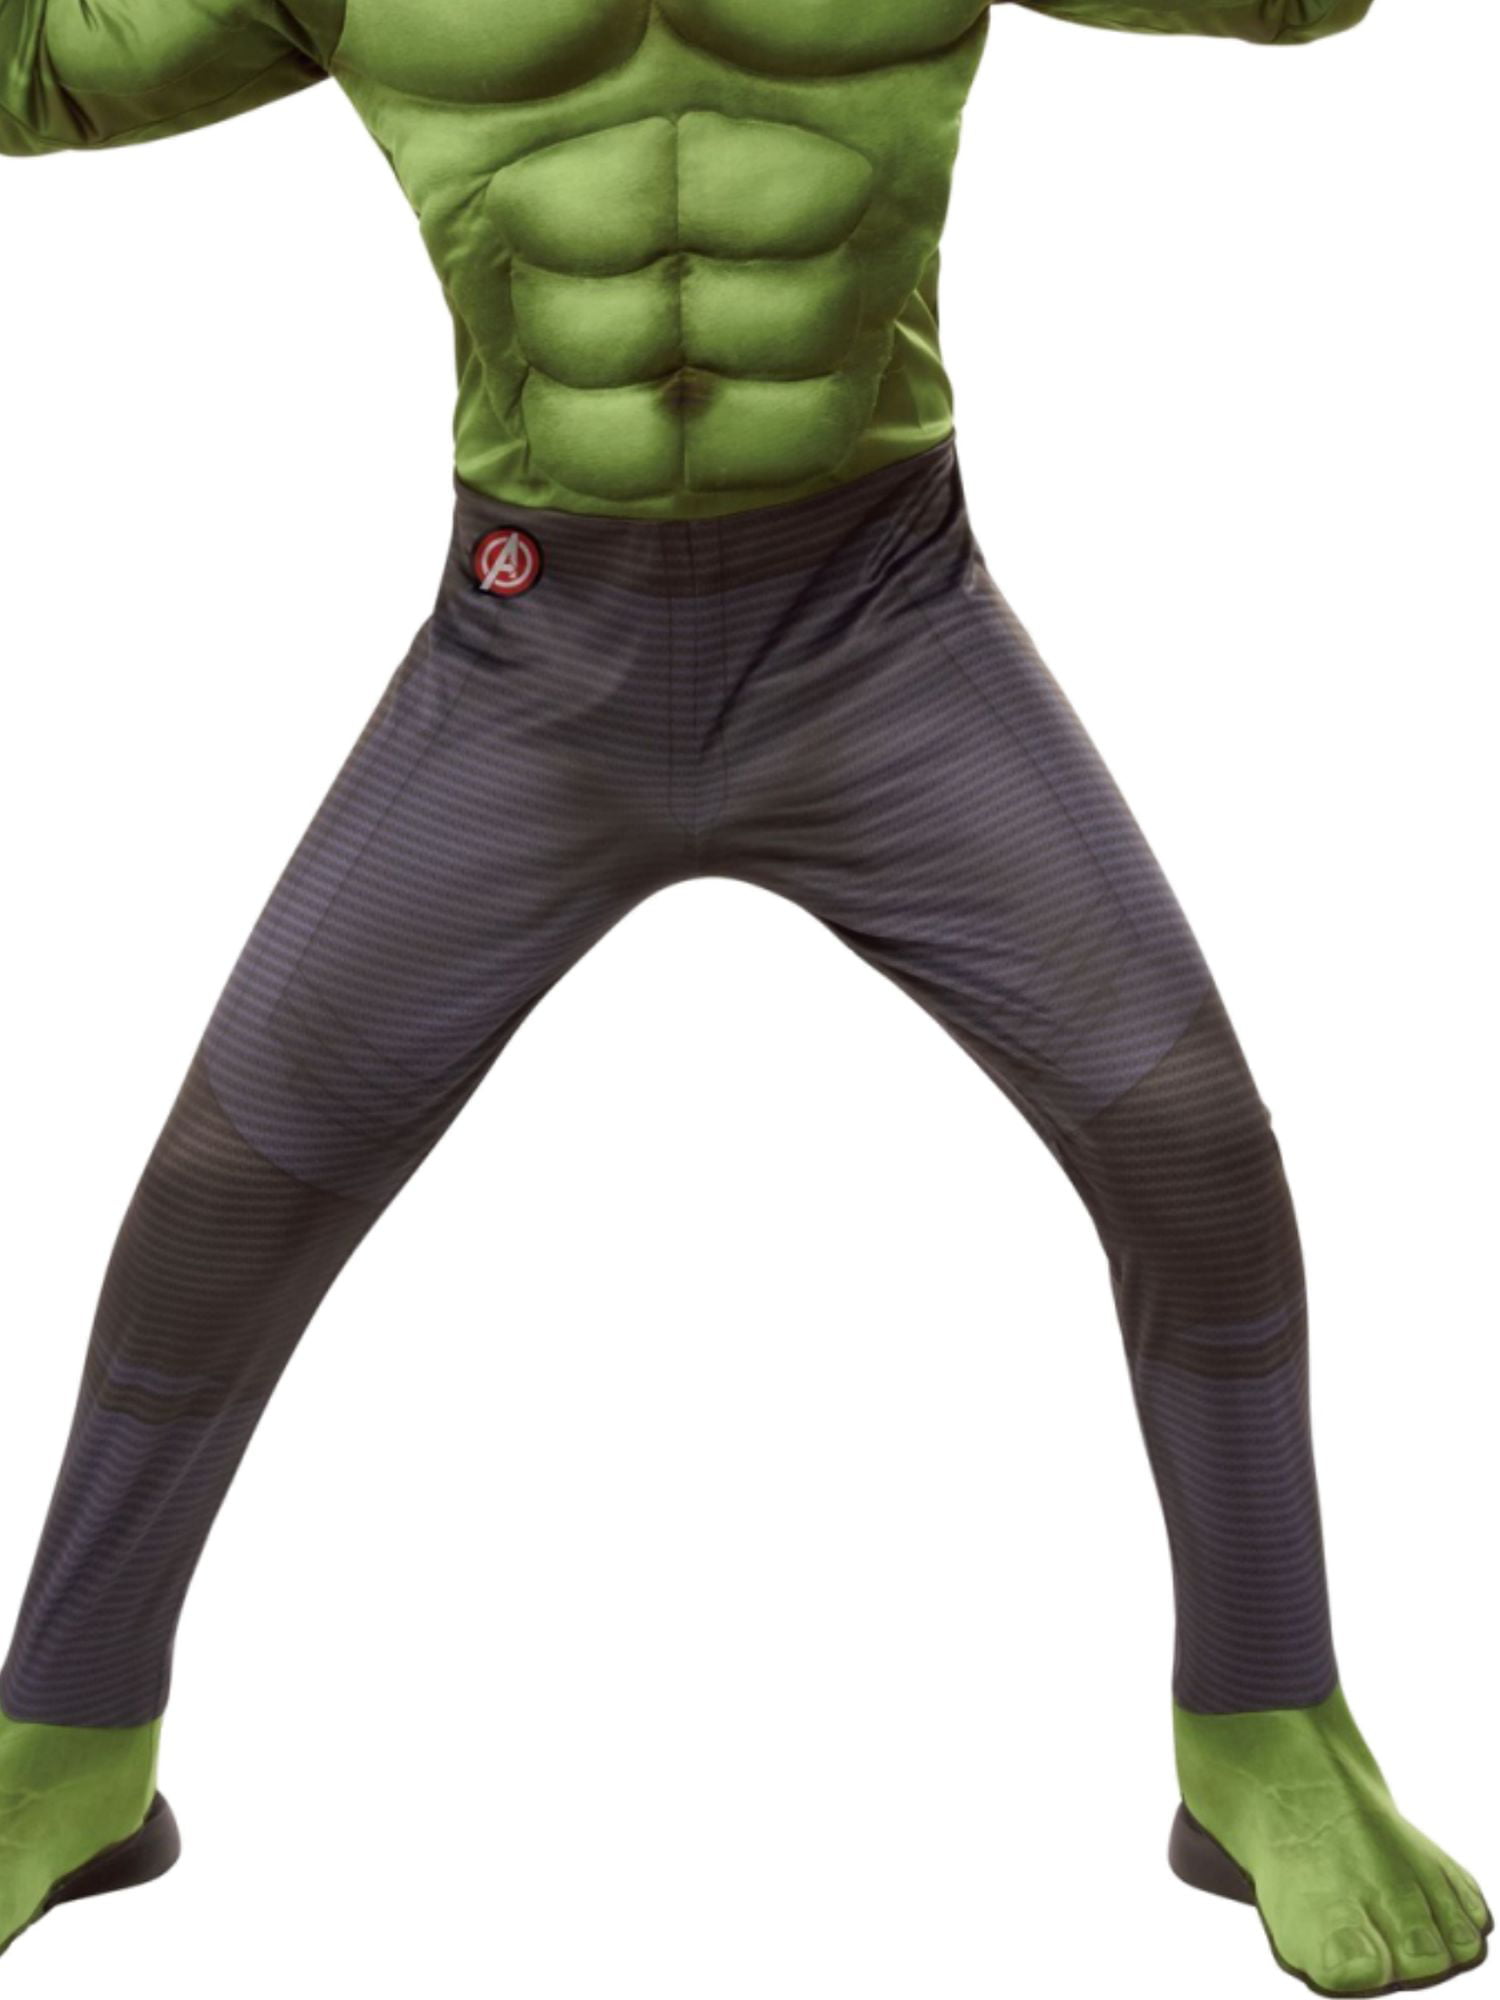 Incredible Hulk T-Shirt Mens Fancy Dress Avengers Superhero Adults Costume New 